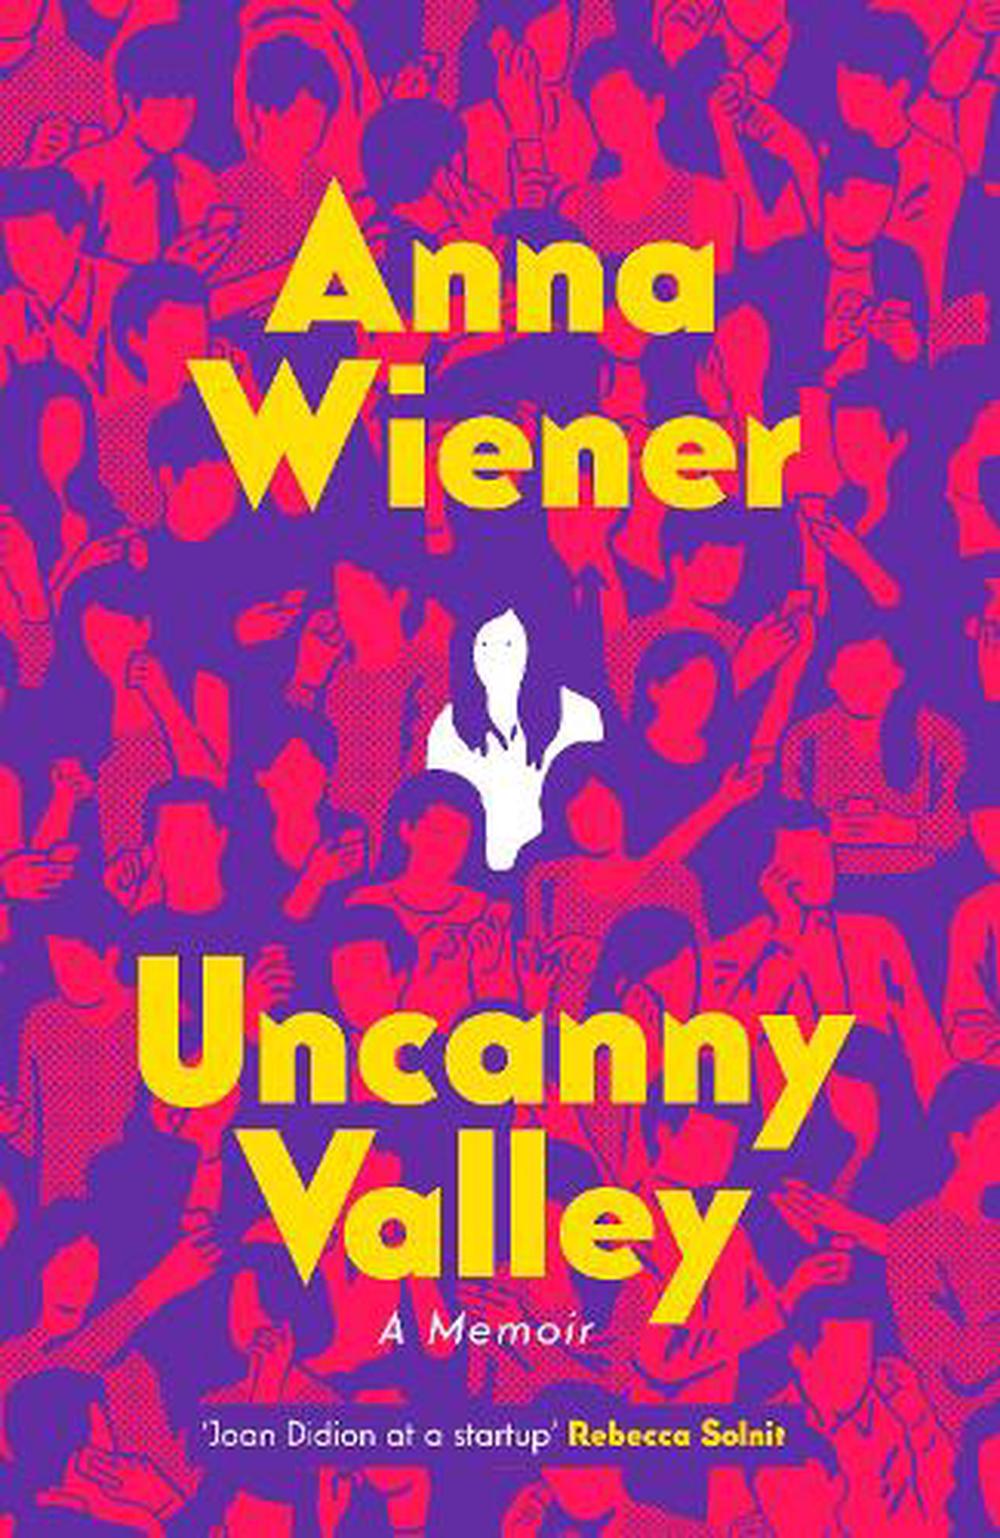 anna wiener uncanny valley